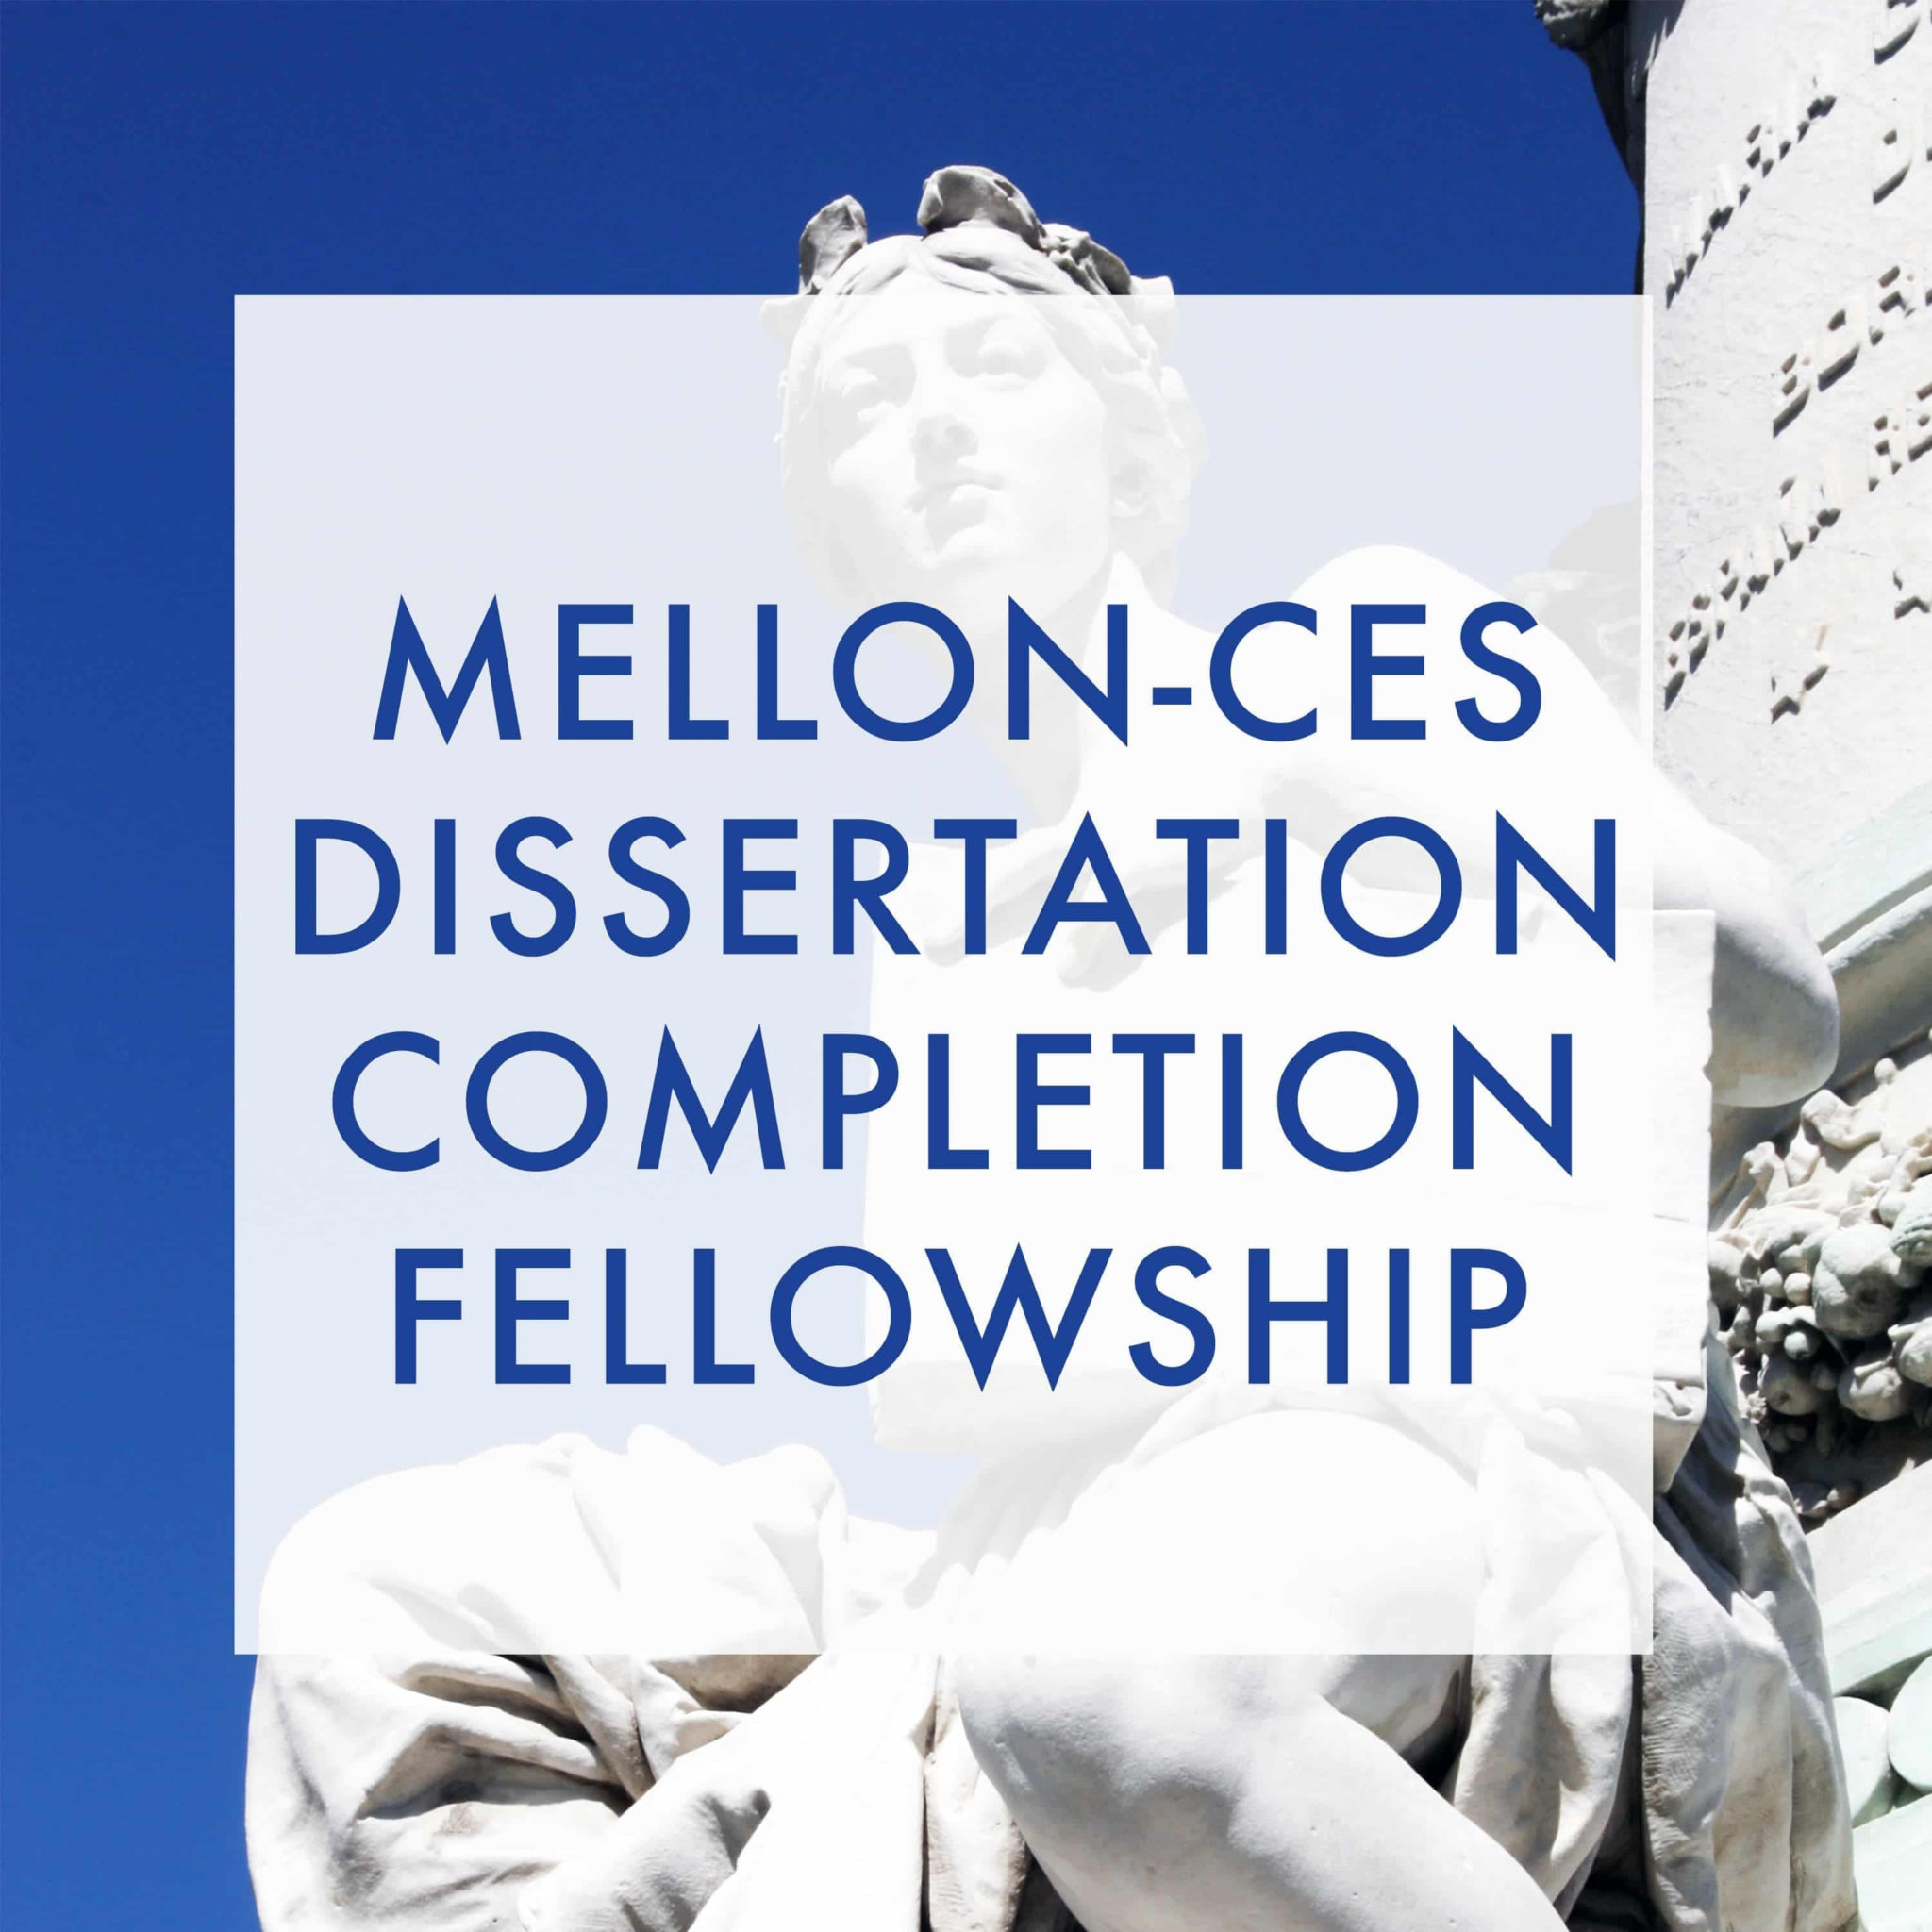 dissertation completion fellowship